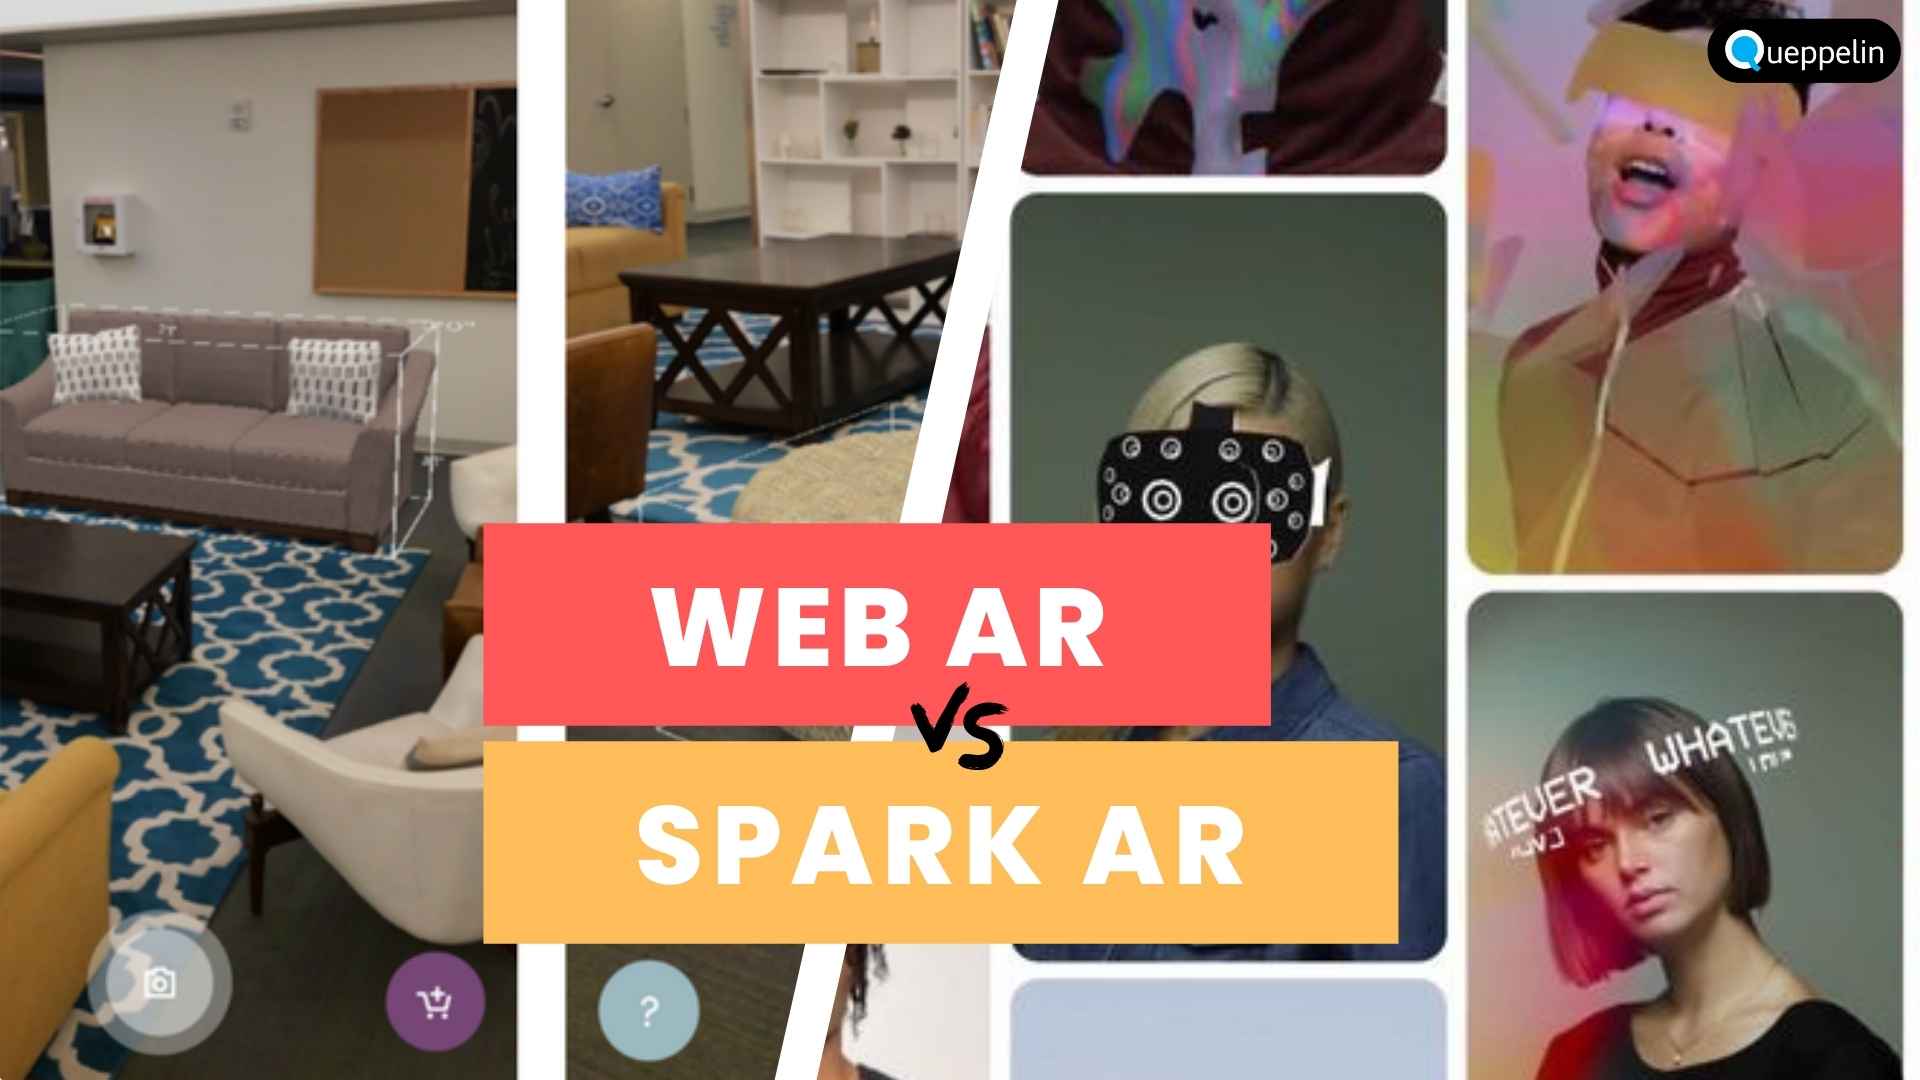 spark ar vs webar comparison